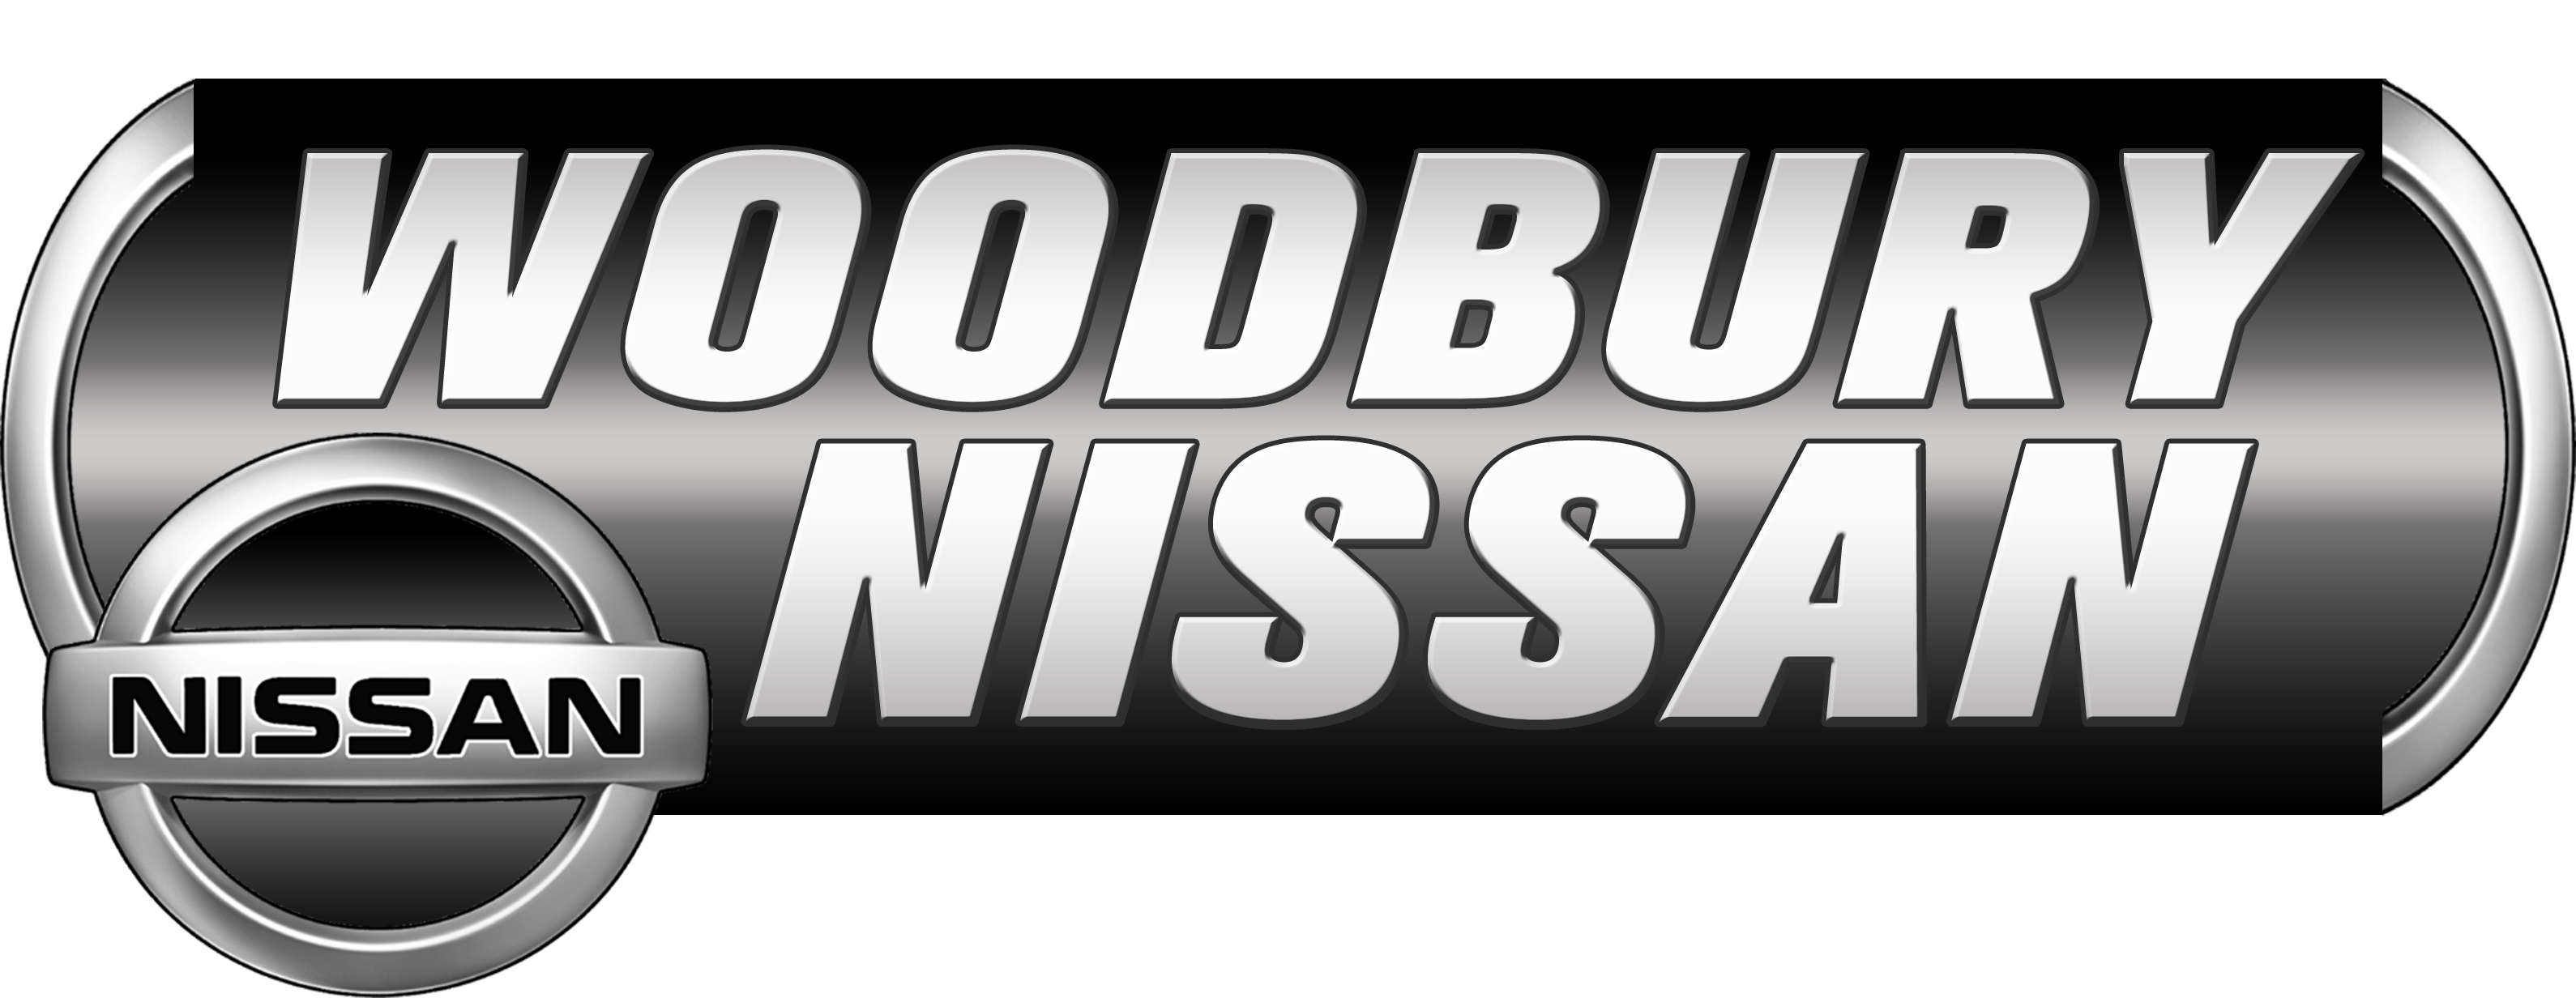 Nissan dealers woodbury nj